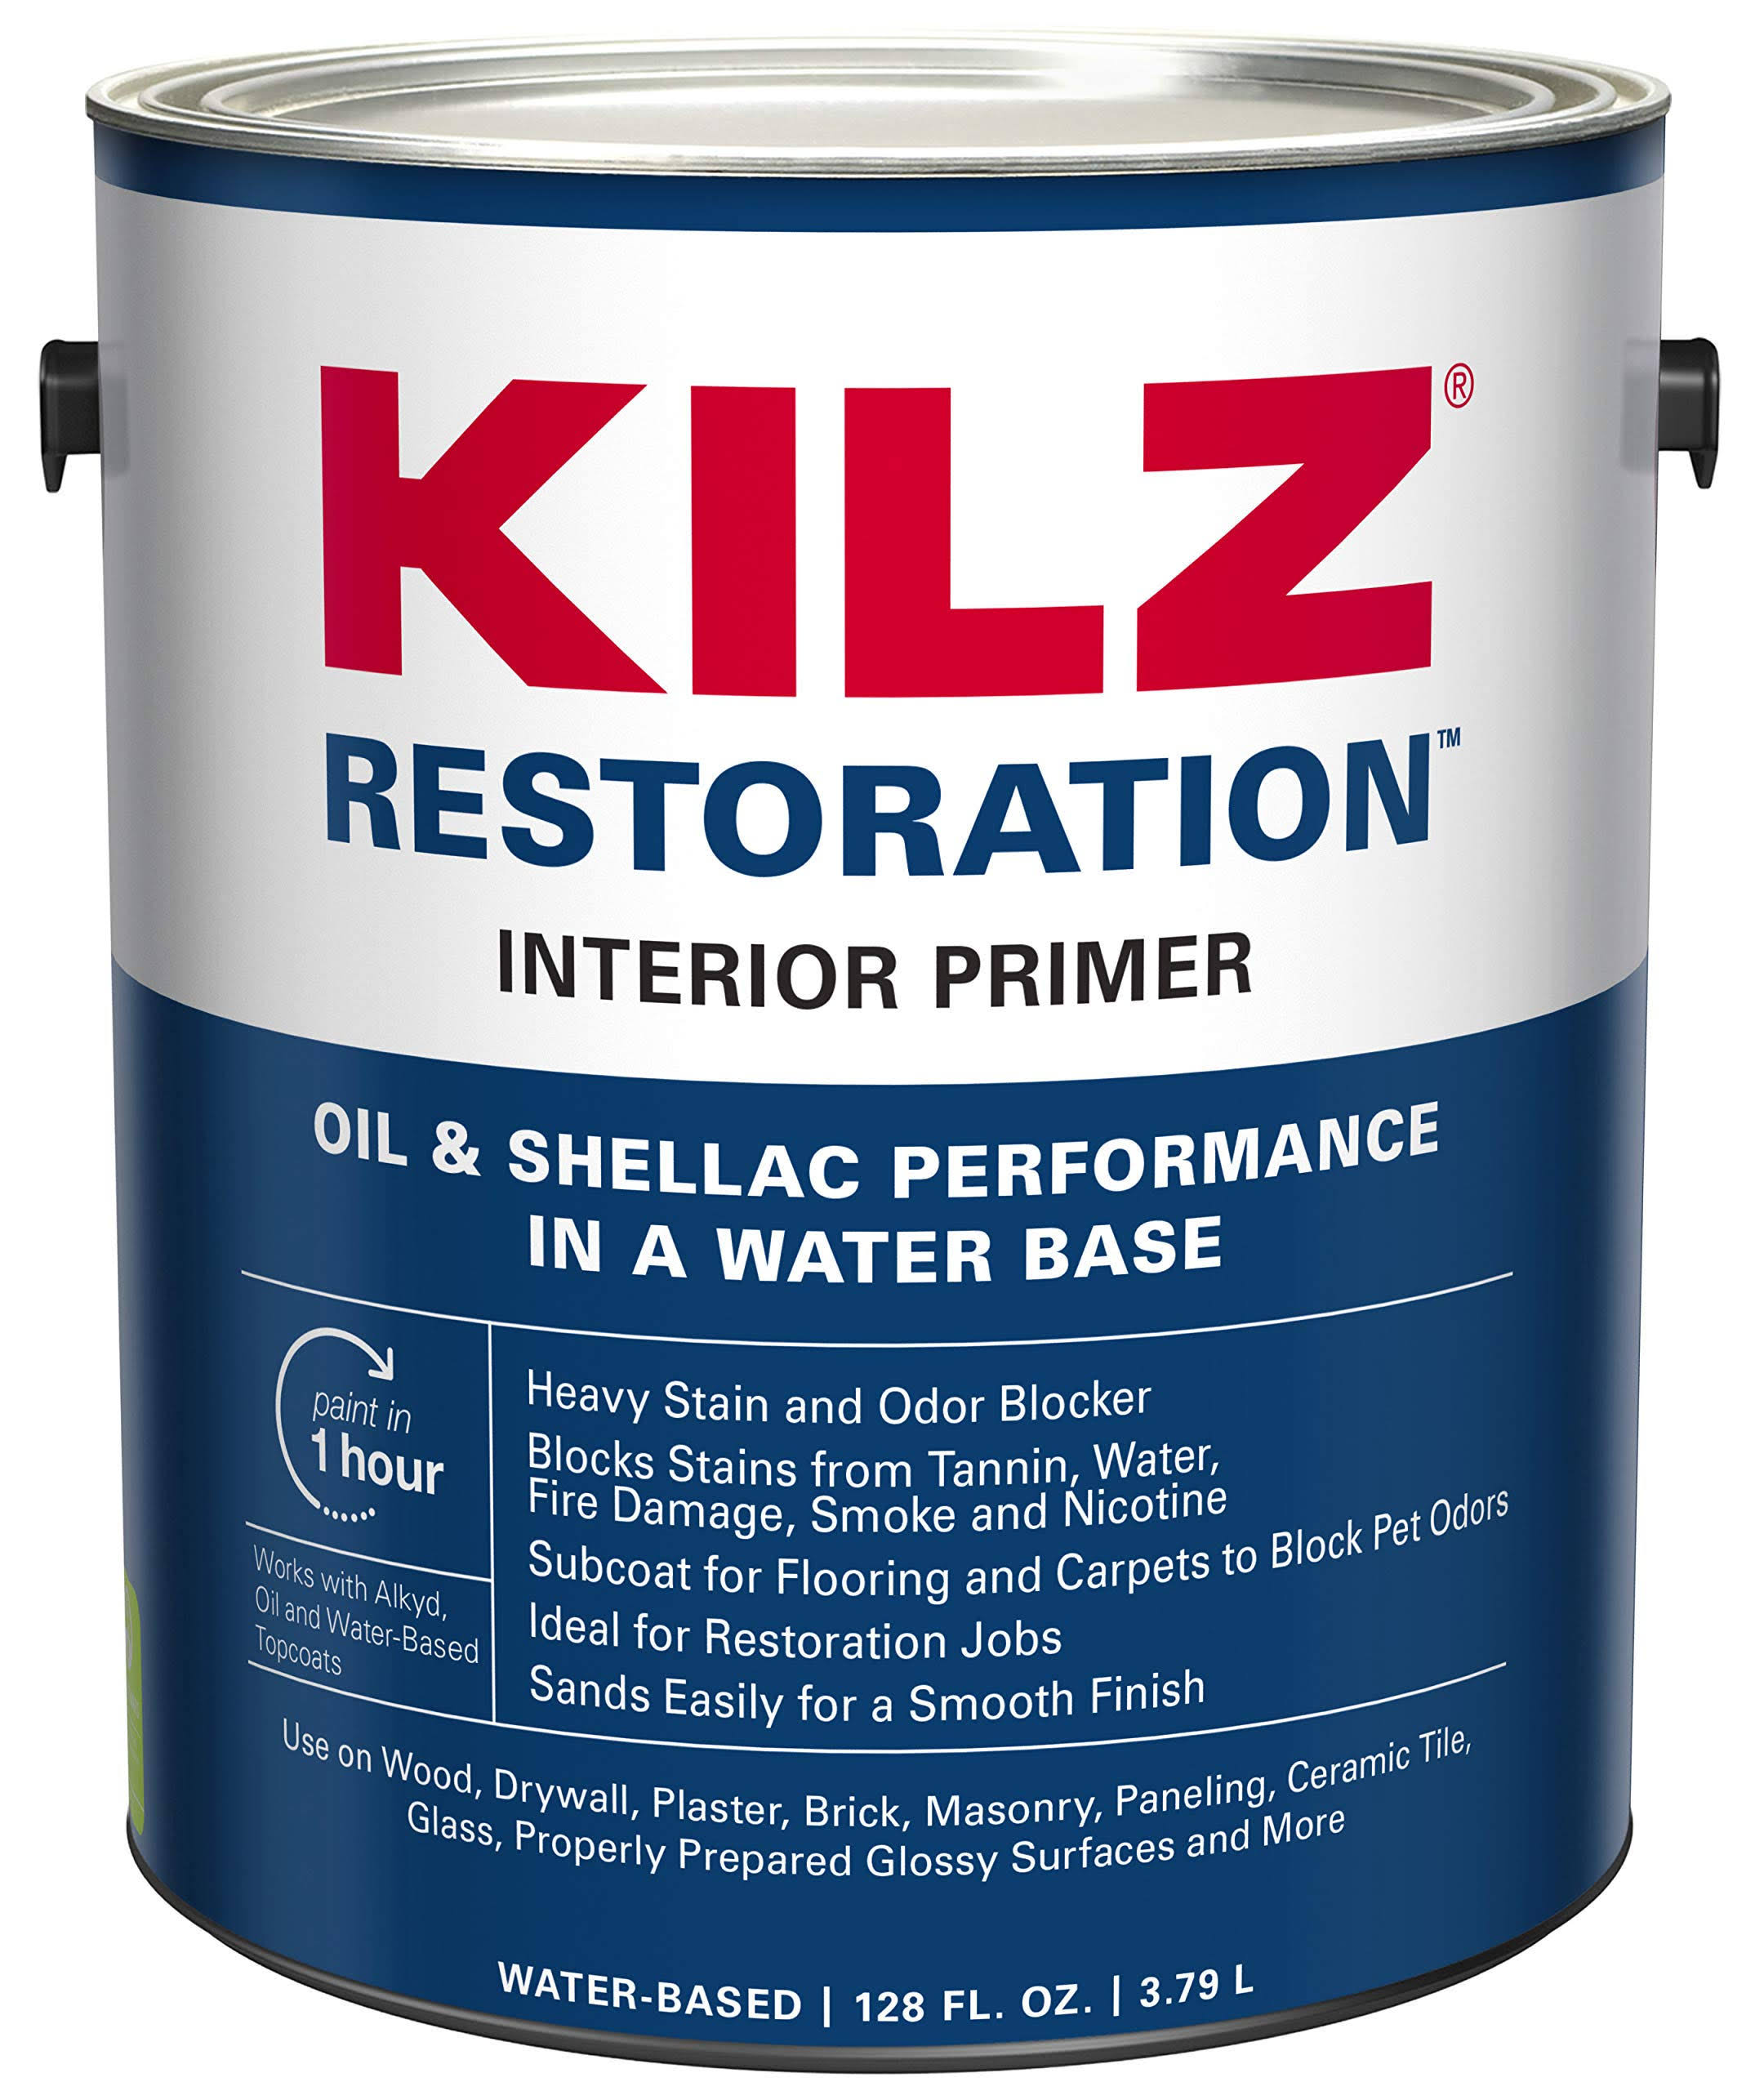 Kilz Max L200201 Water Based Interior Primer Sealer and Stain-Blocker - 1gal, White